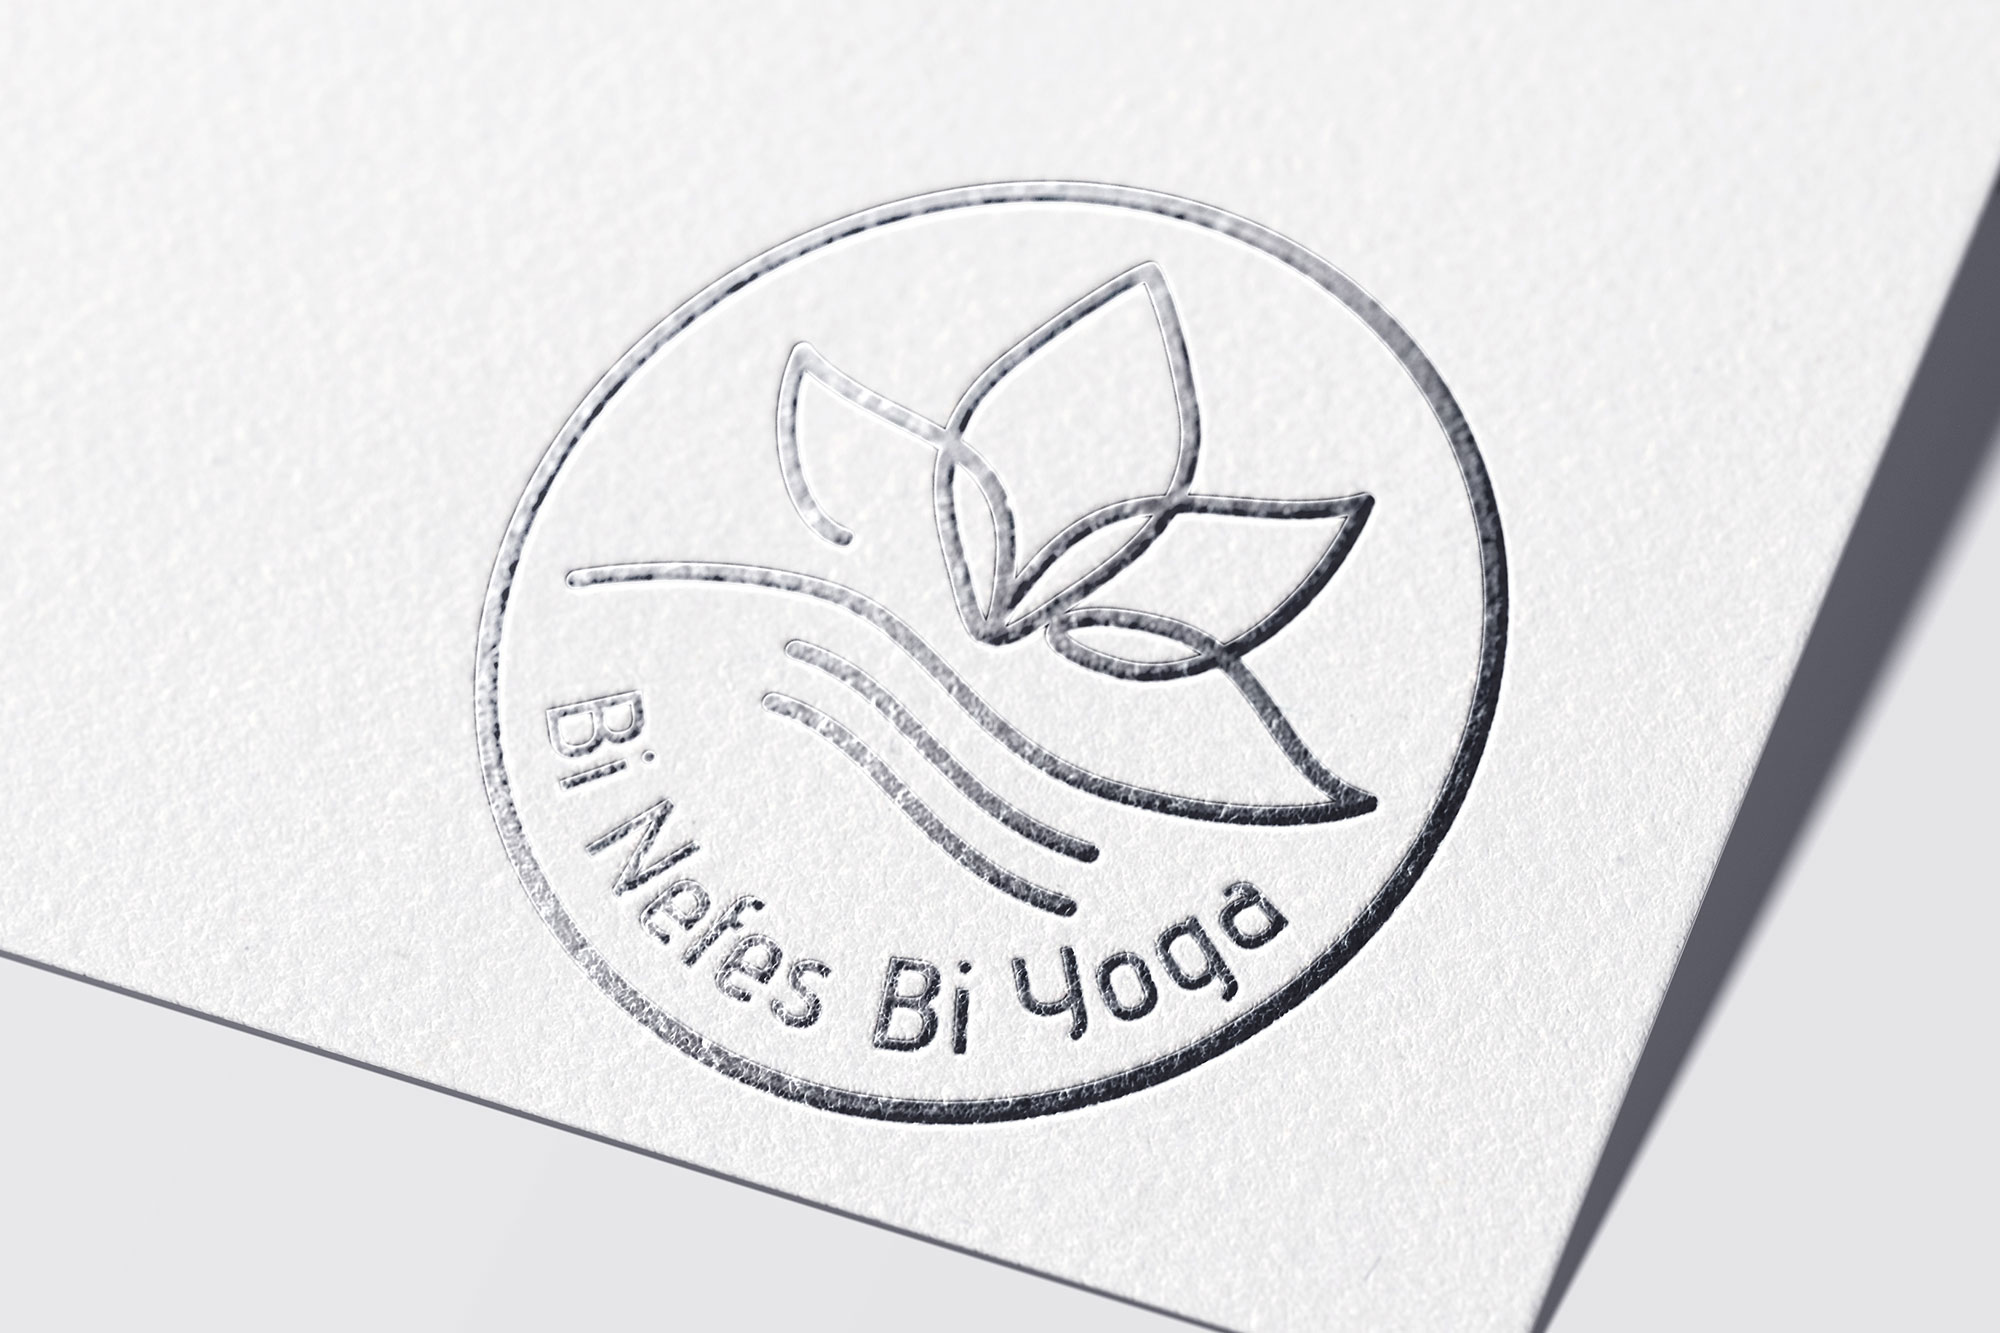 Bi Nefes Bi Yoga Logo